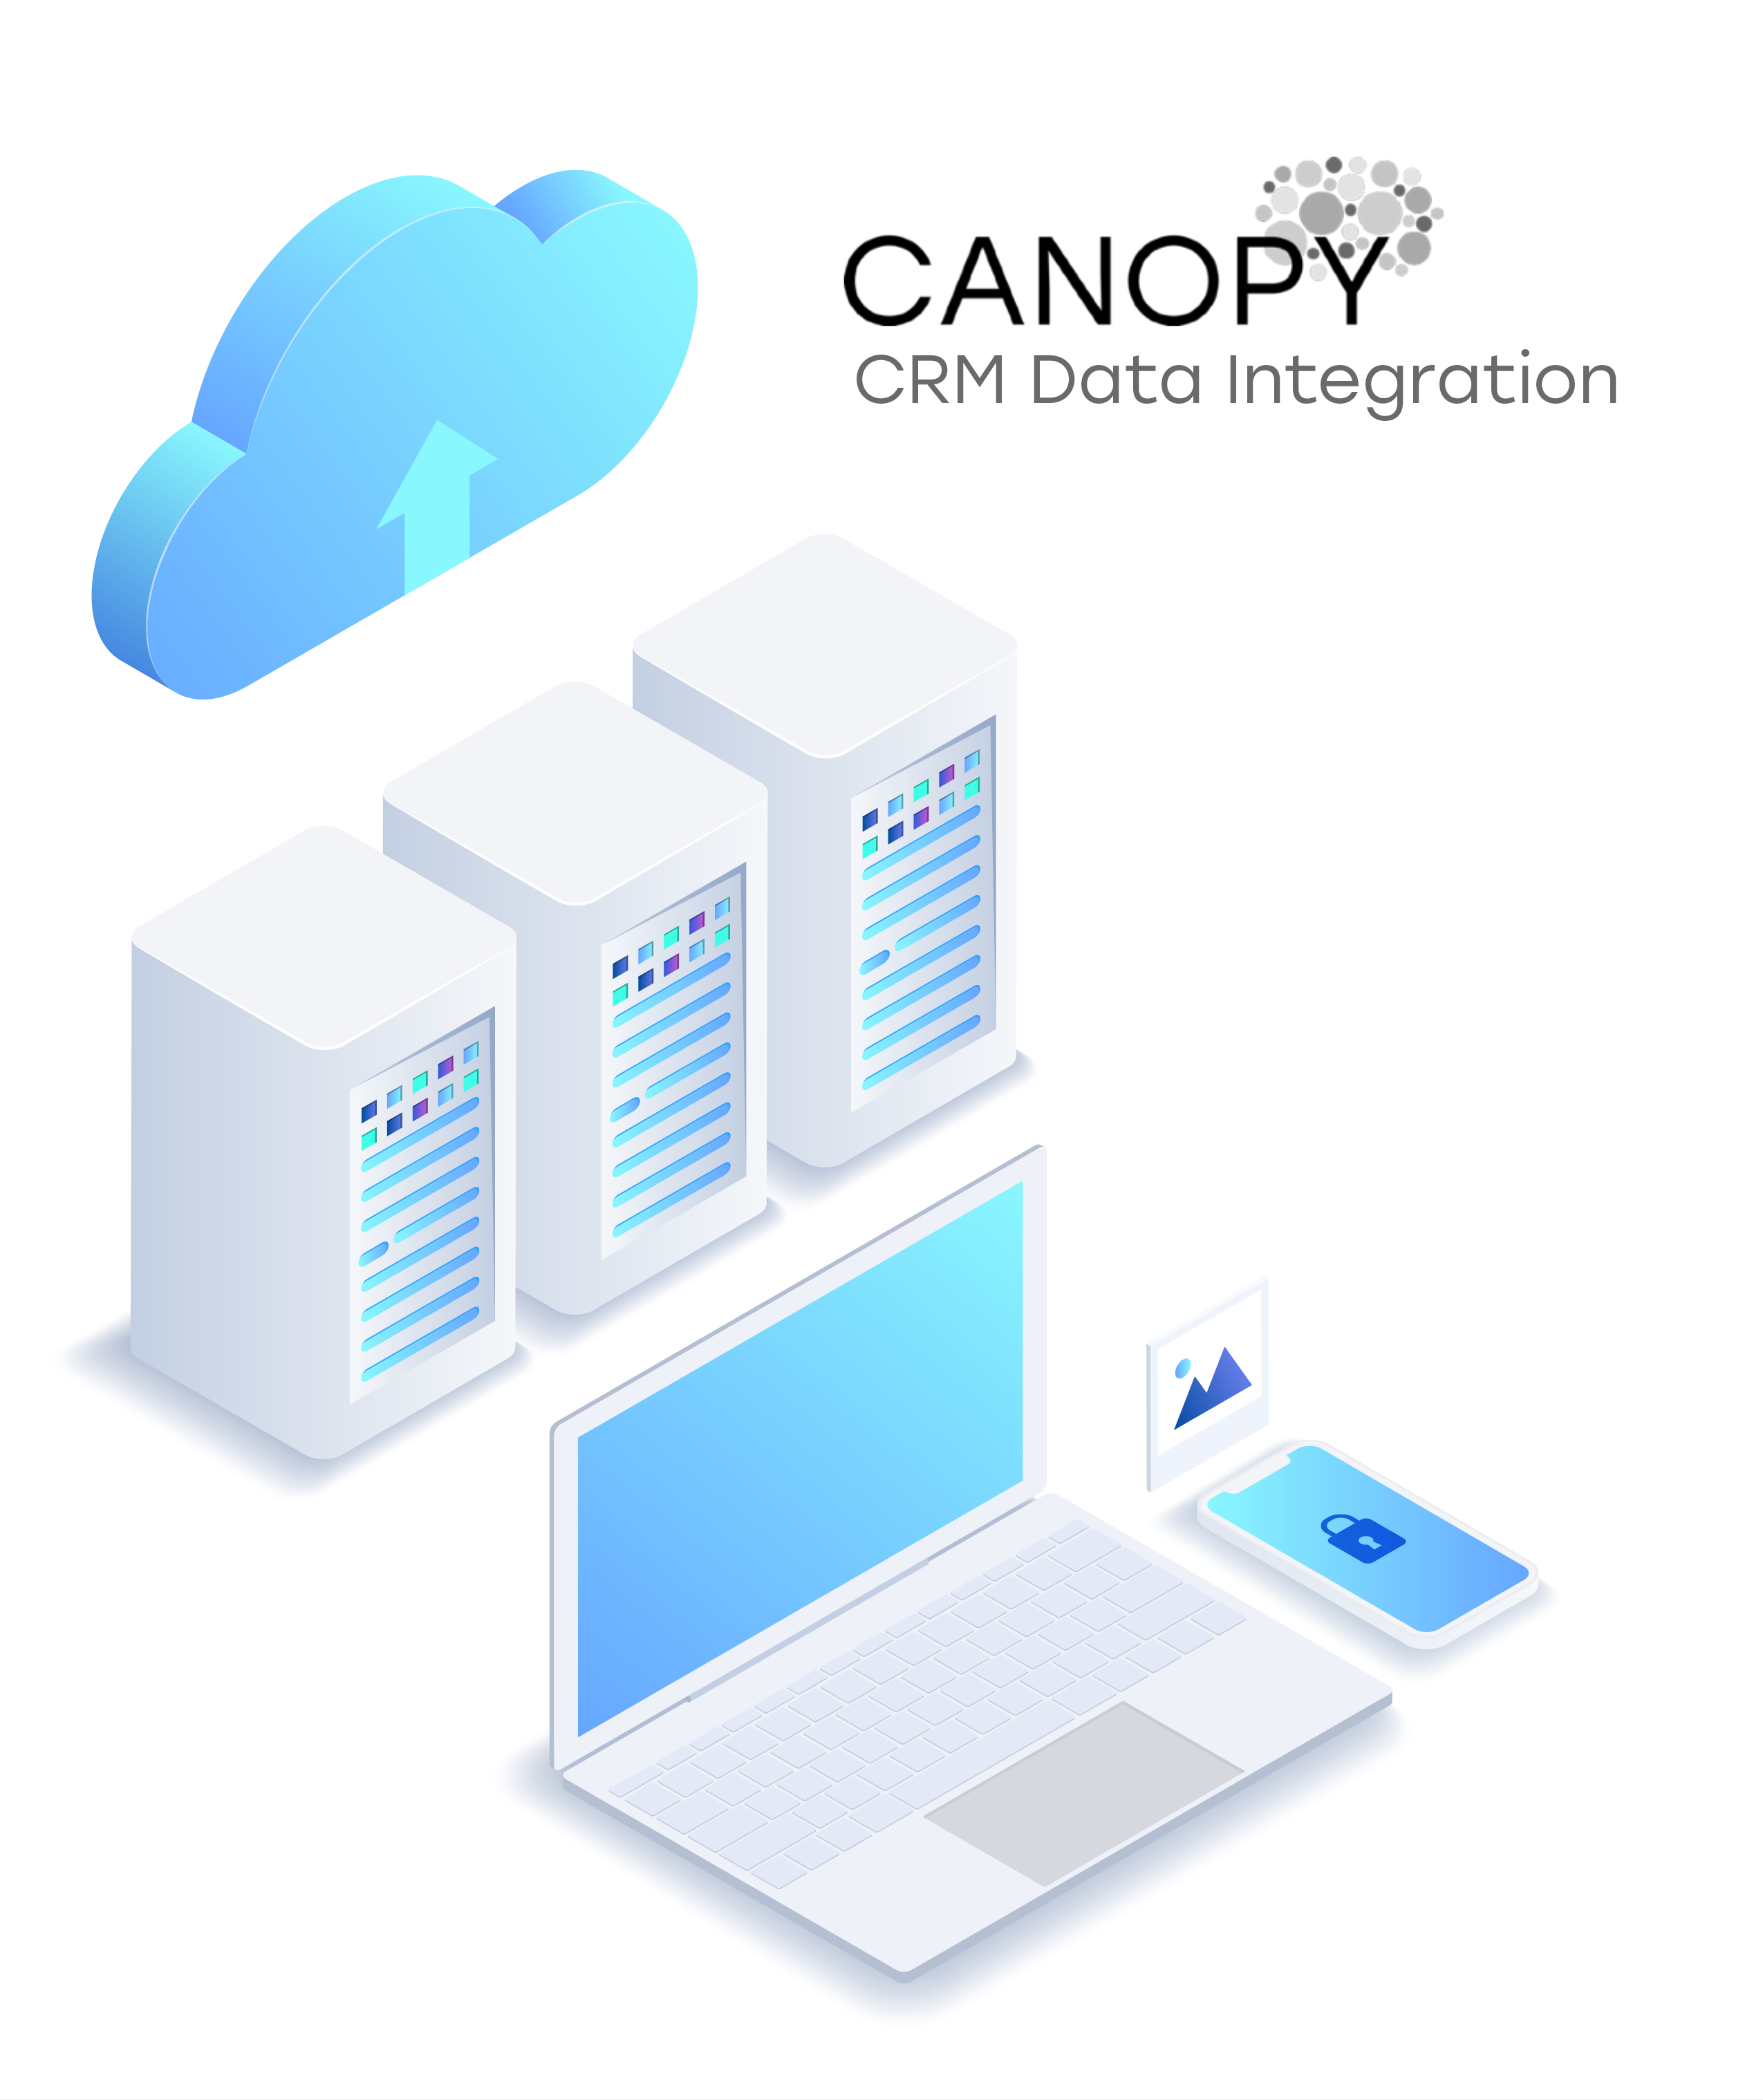 Datorama Canopy IQ Case Study 1, Canopy